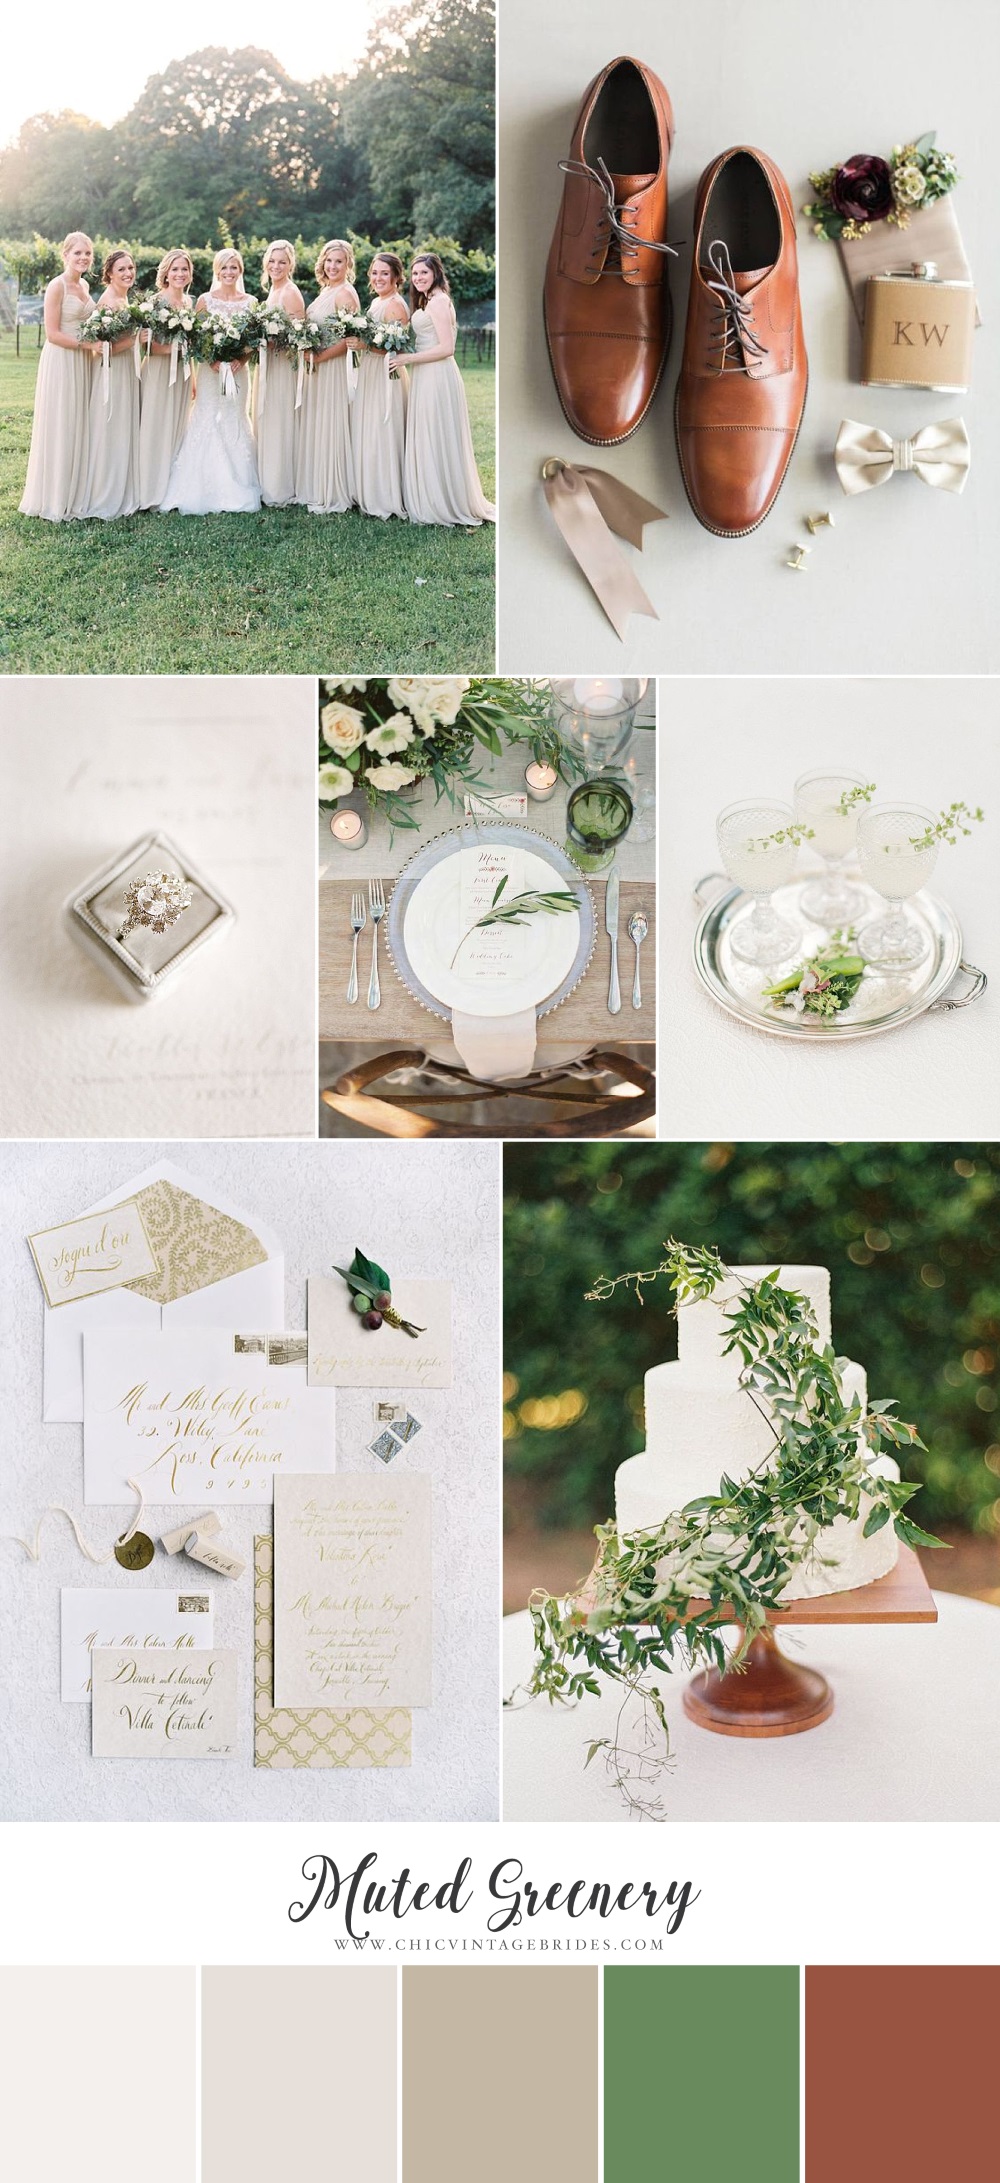 Muted Greenery - Spring Wedding Inspiration Board